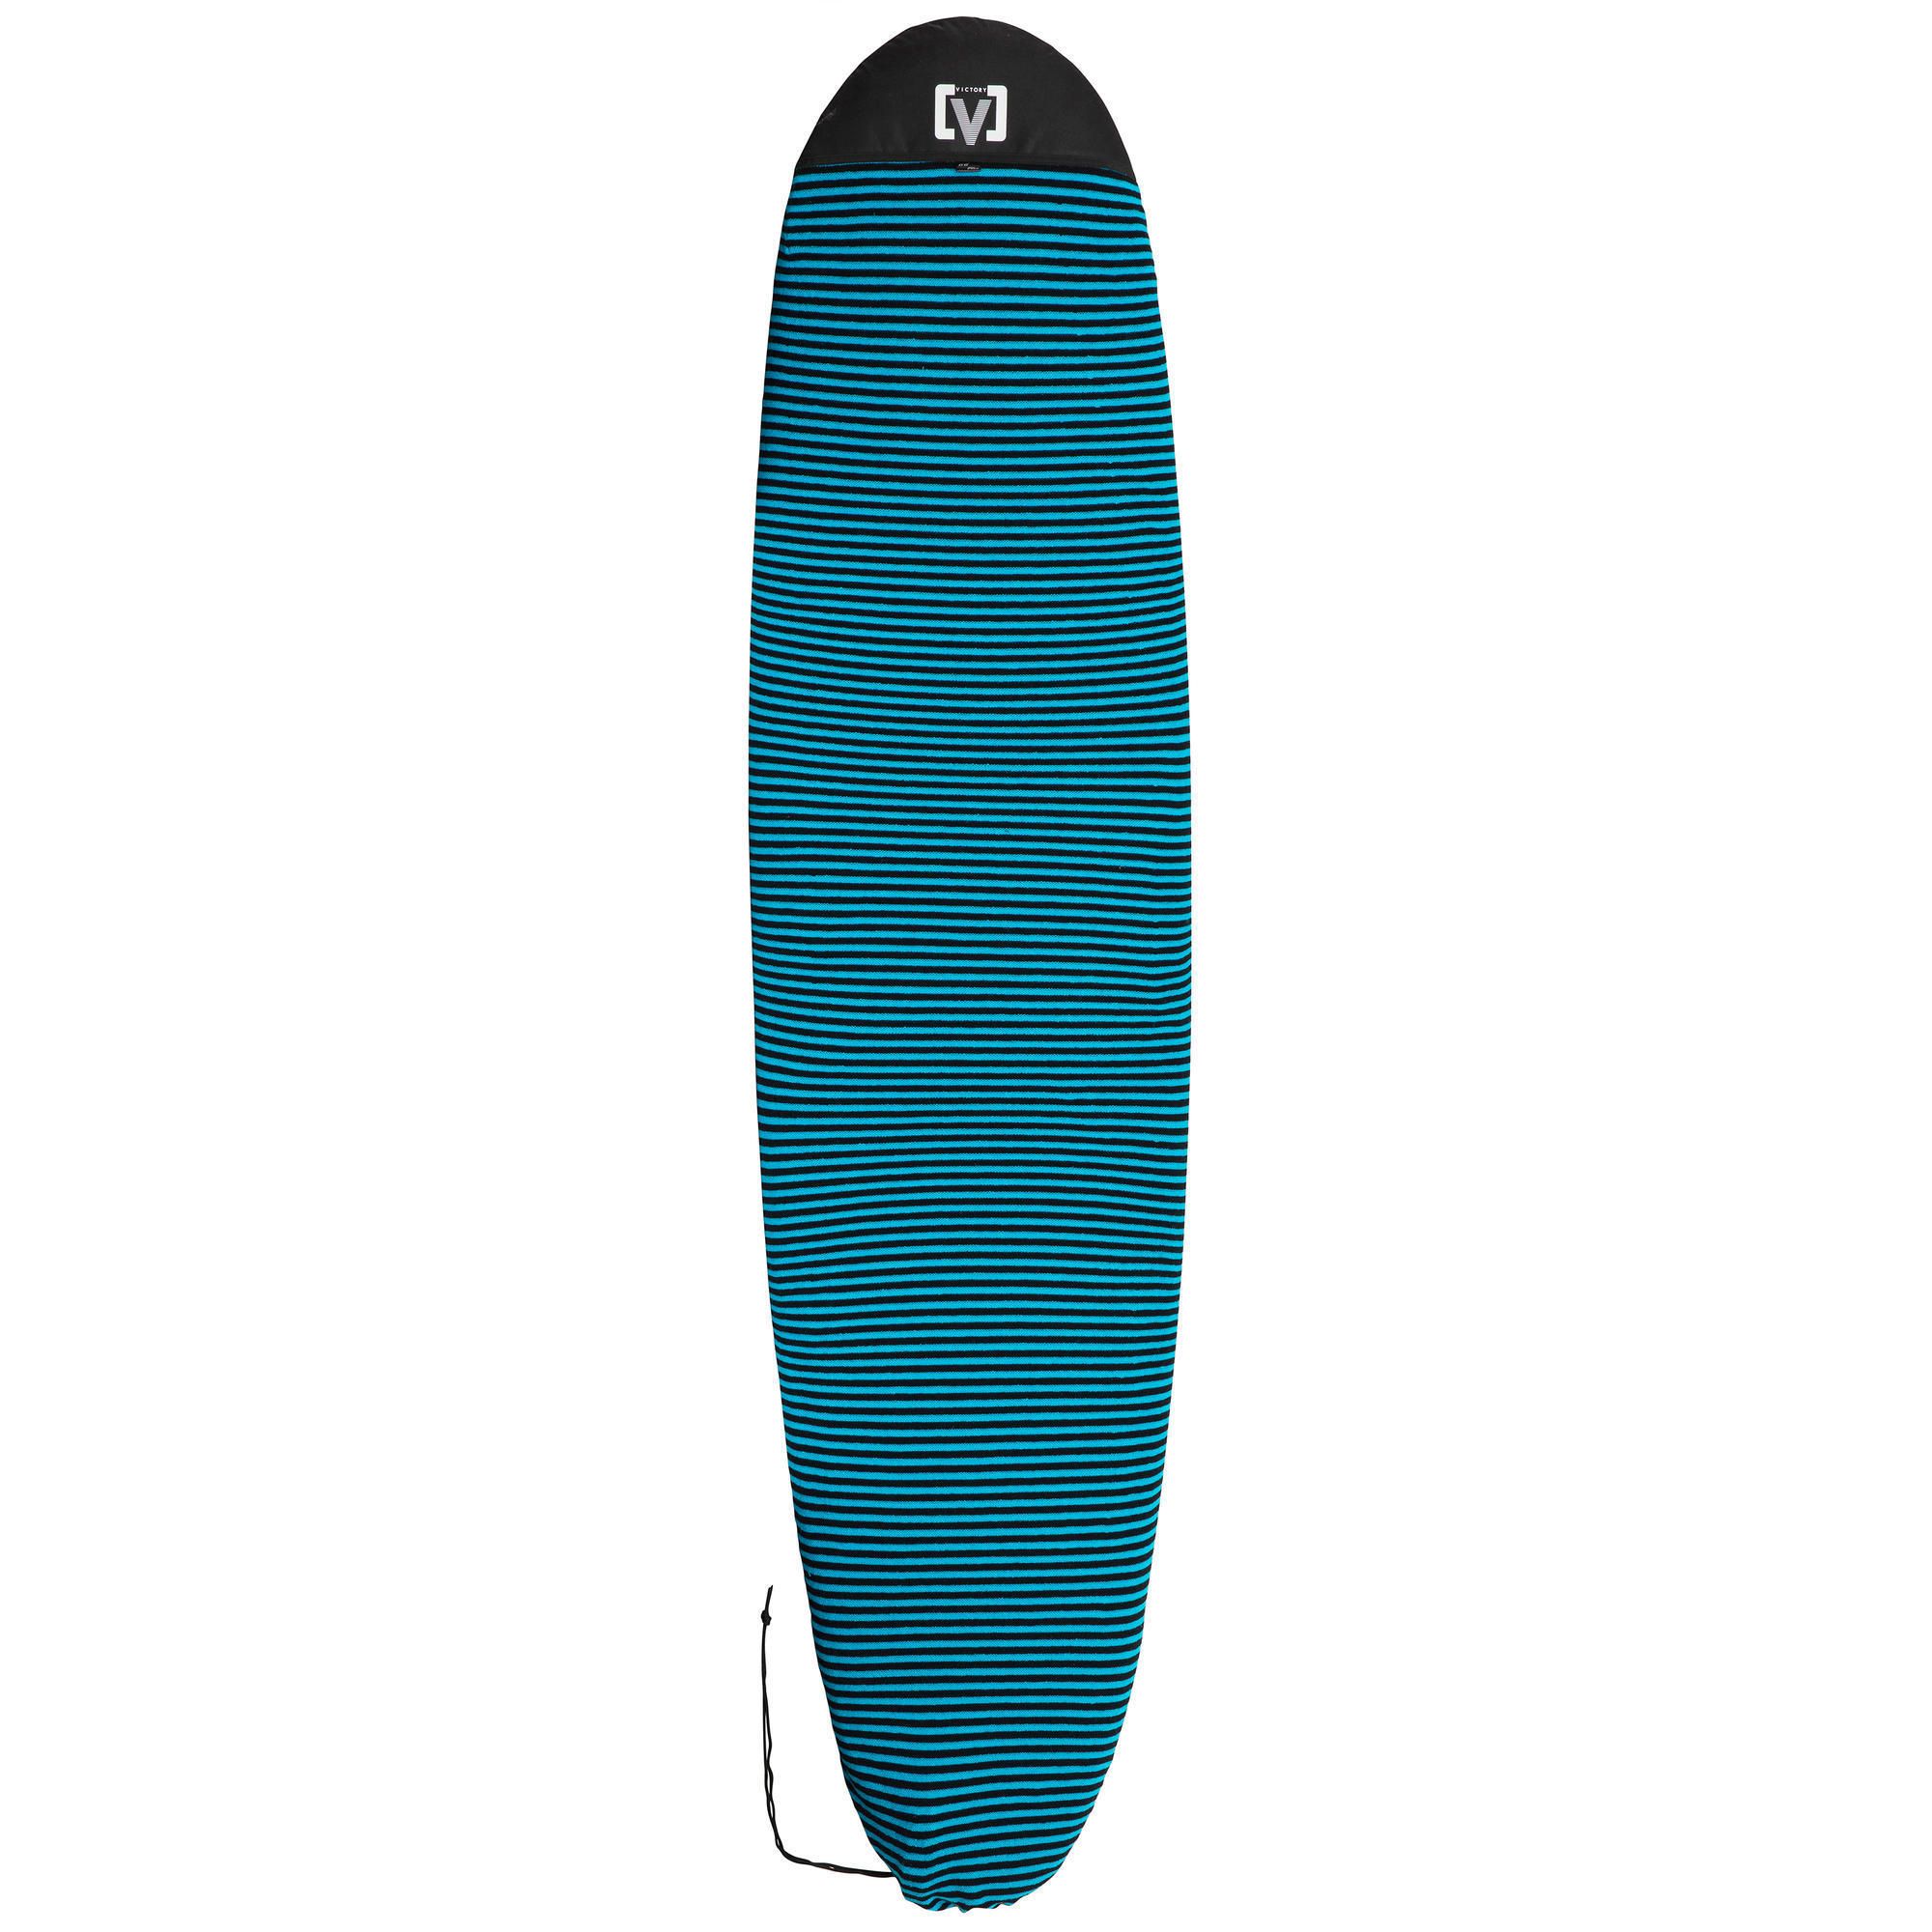 Housse de surf chaussette Longboard